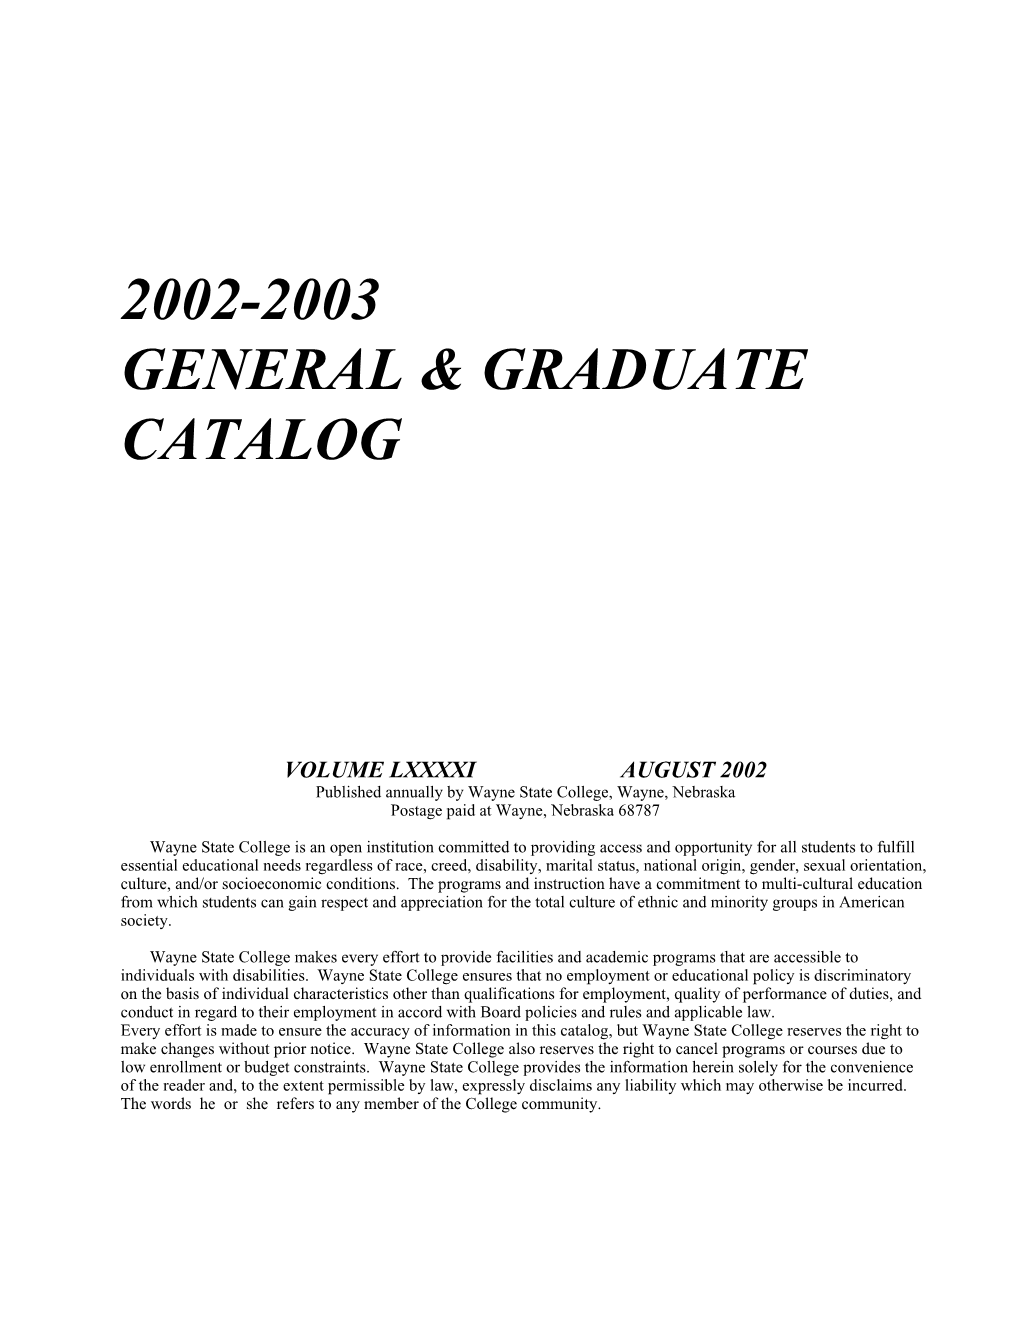 2002-2003 General & Graduate Catalog